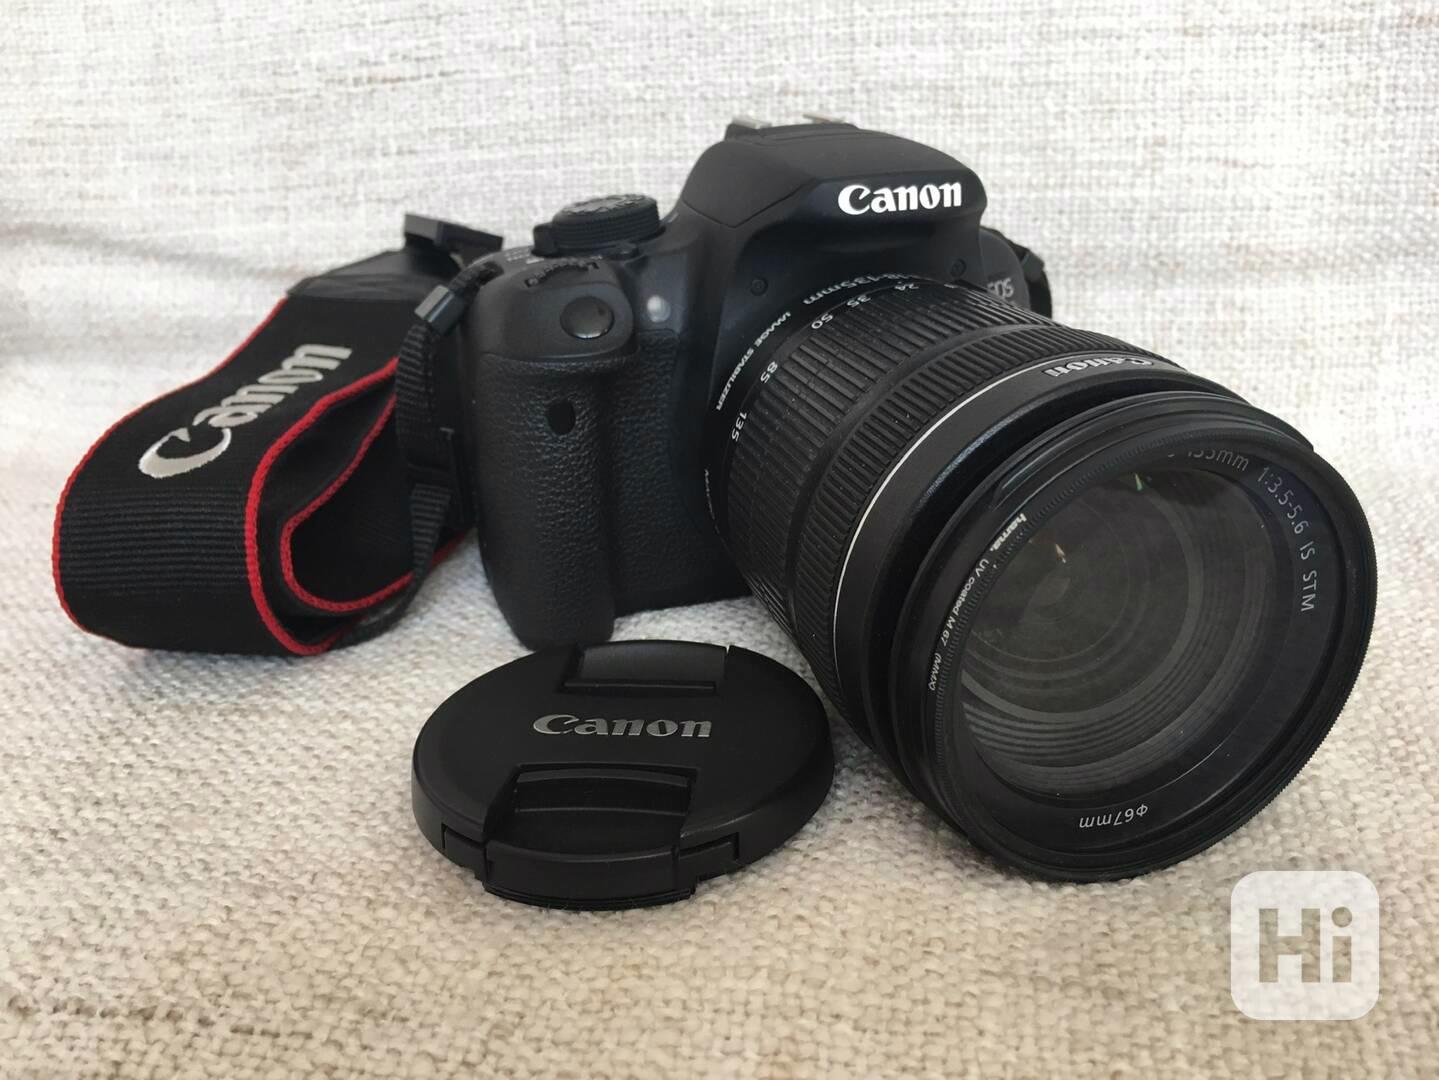 Zrcadlovka Canon EOS 700D + objektiv 18-135mm  - foto 1